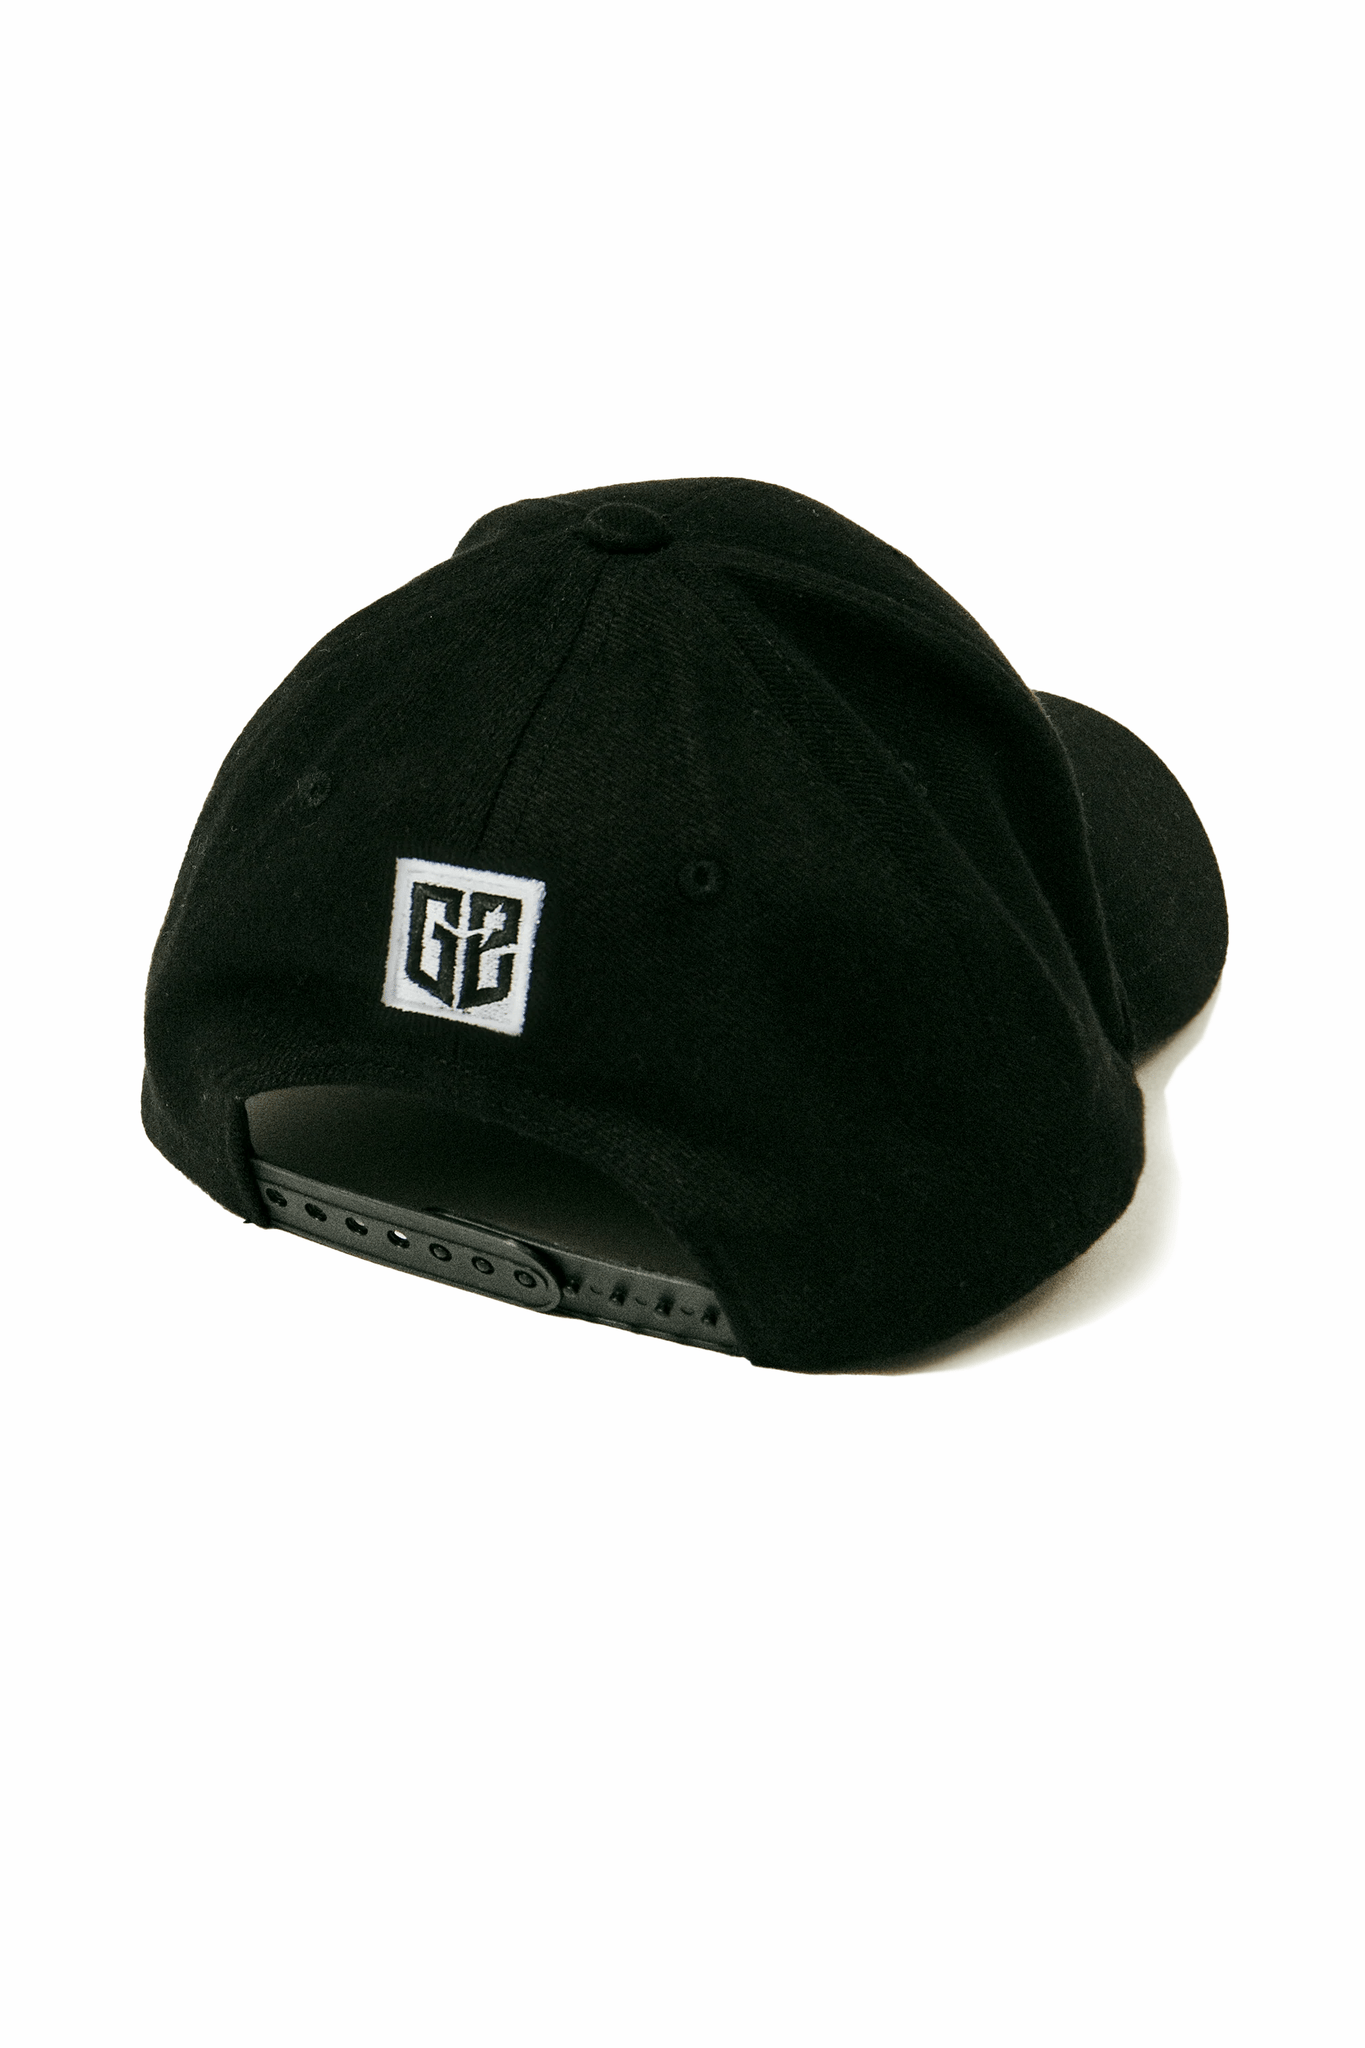 G2 ESSENTIALS - Snapback cap (curved brim) - Black